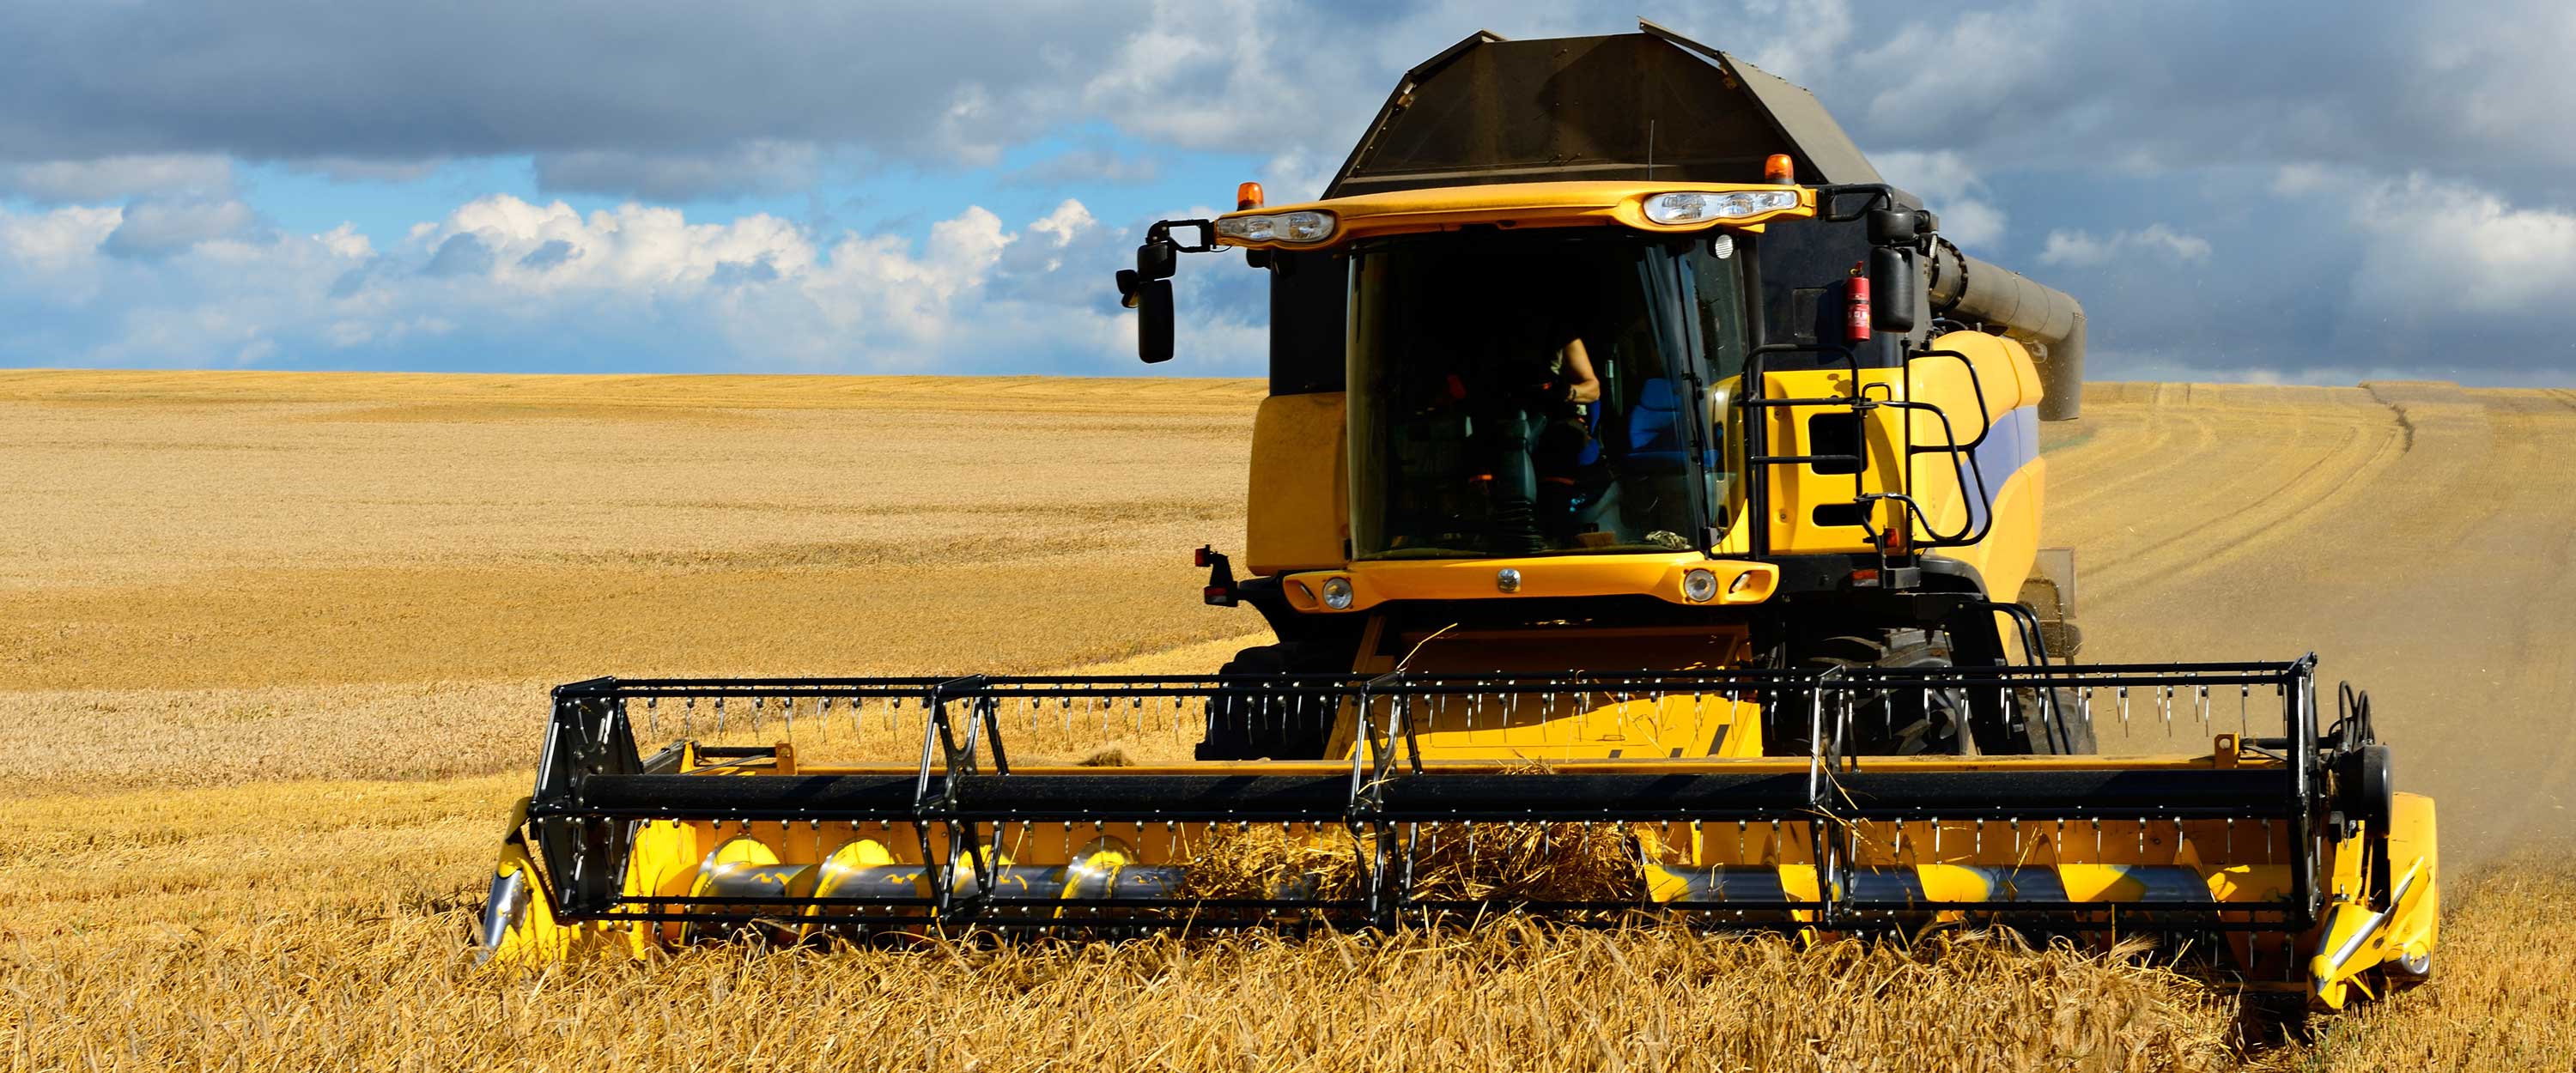 MT Agriculture Combine Harvester